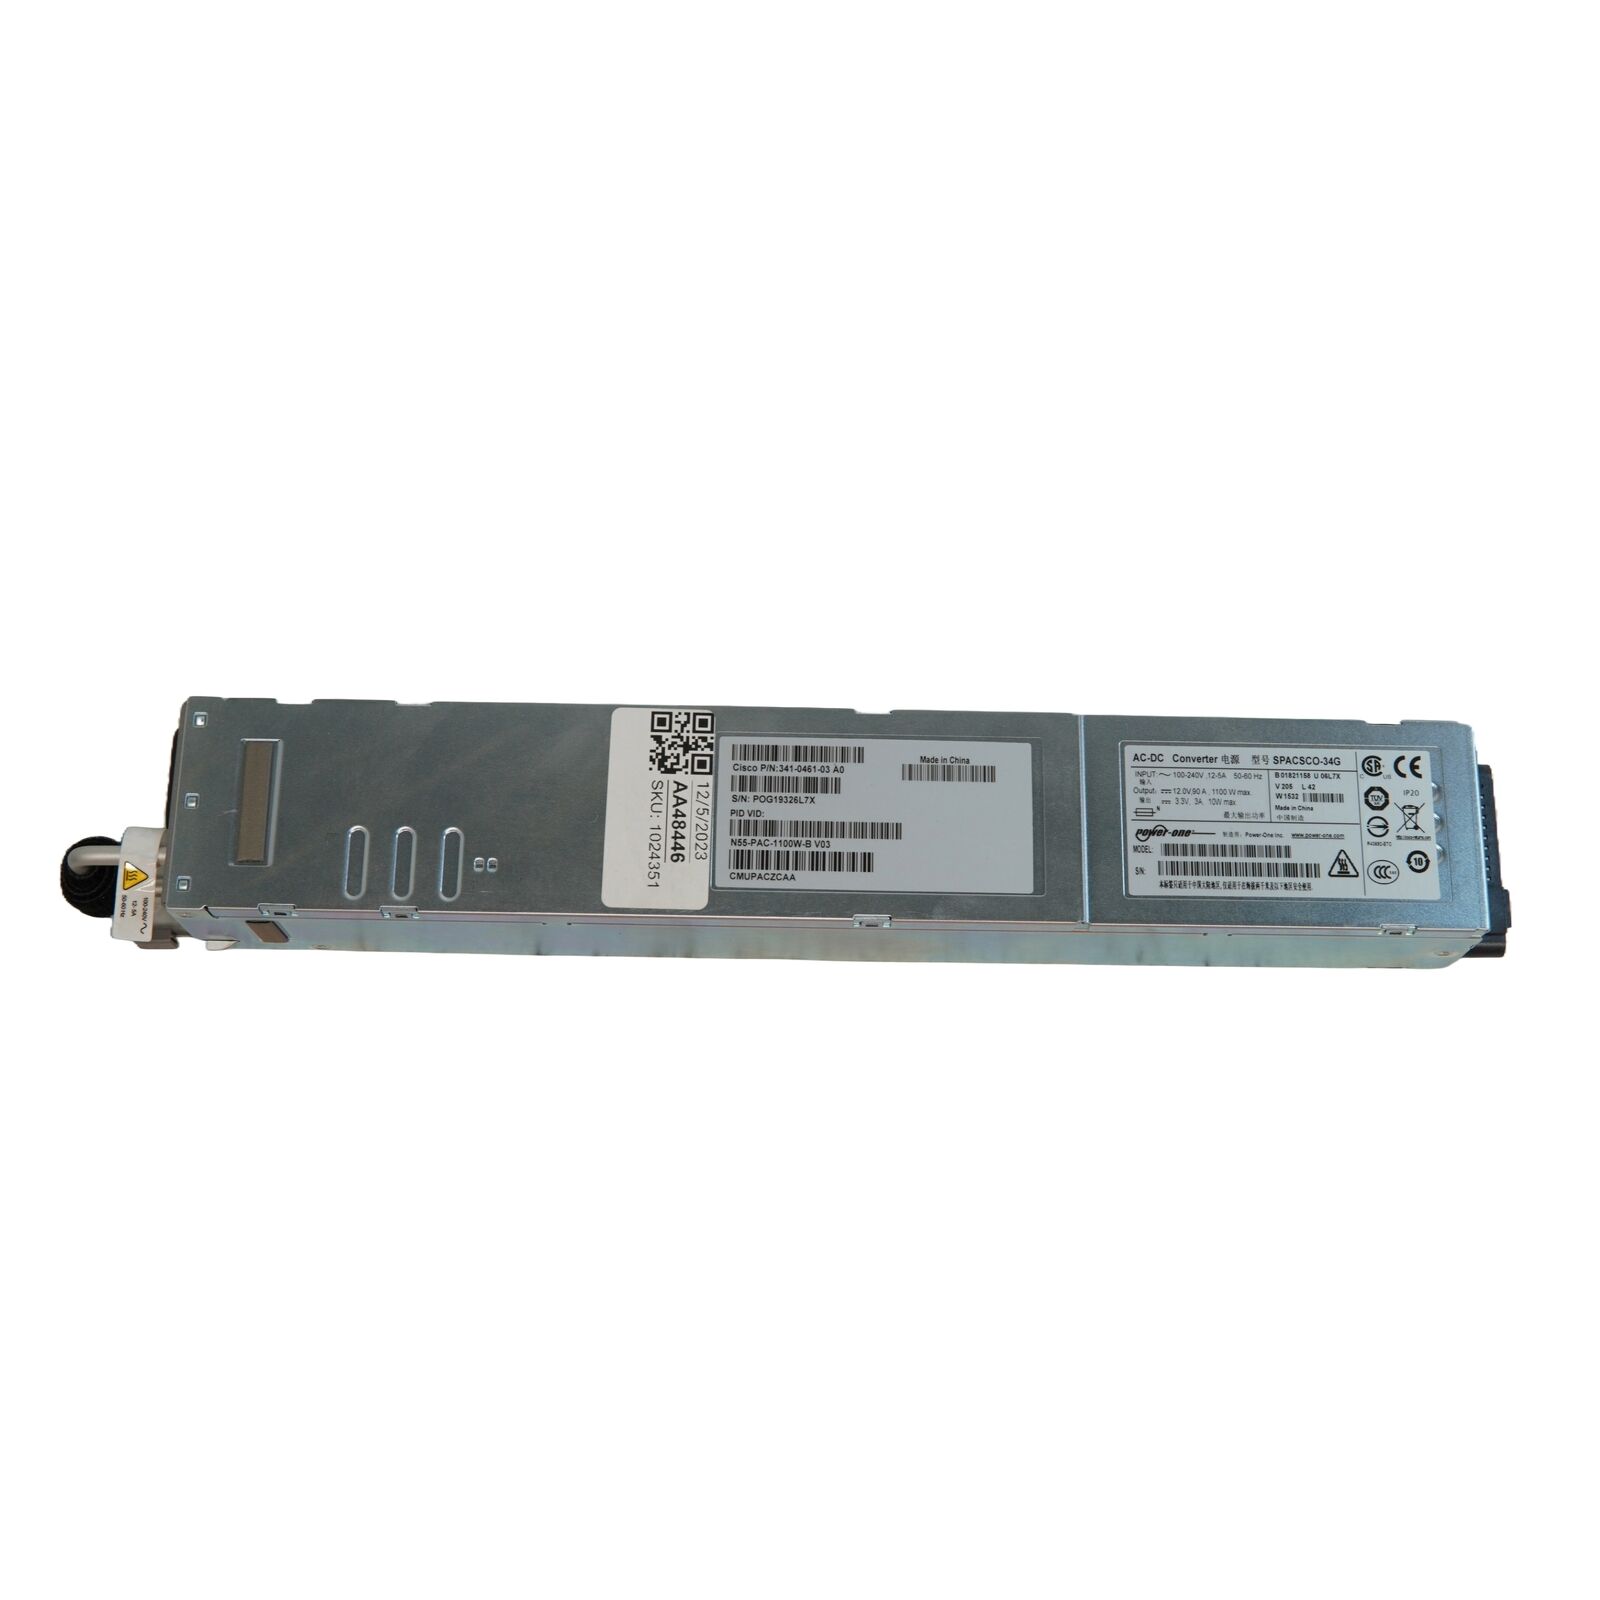 Cisco Nexus 6000 Series 1100W Power Supply (Reverse airflow) N55-PAC-1100W-B